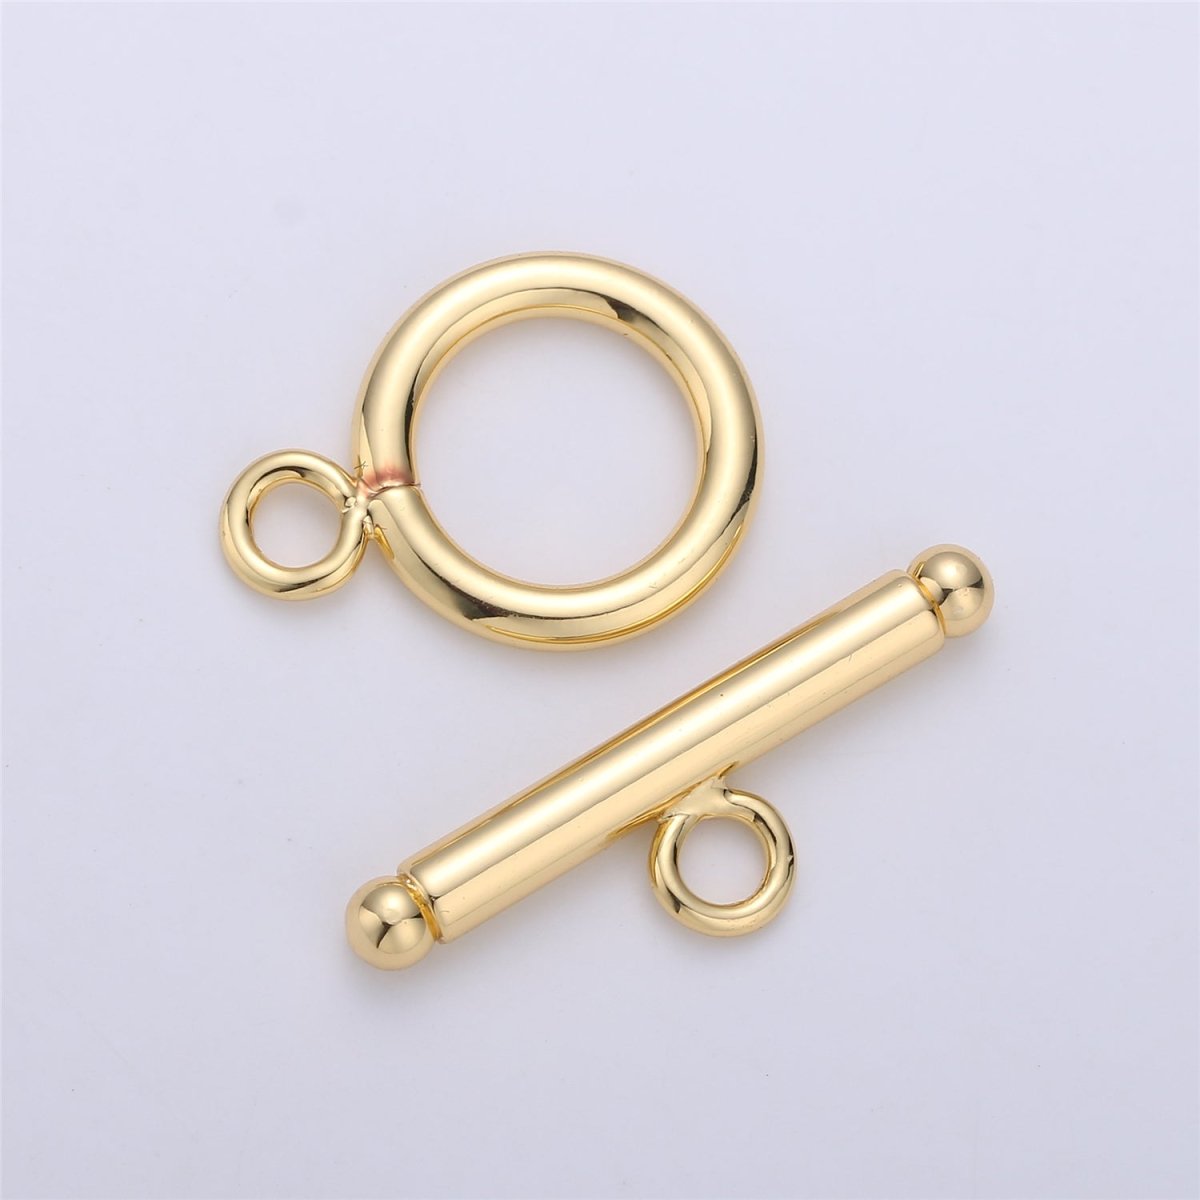 15mm 14K Gold Filled Toggle Clasp 1 set for Bracelet Necklace Jewelry Making Supply | K-175 K-121 - DLUXCA